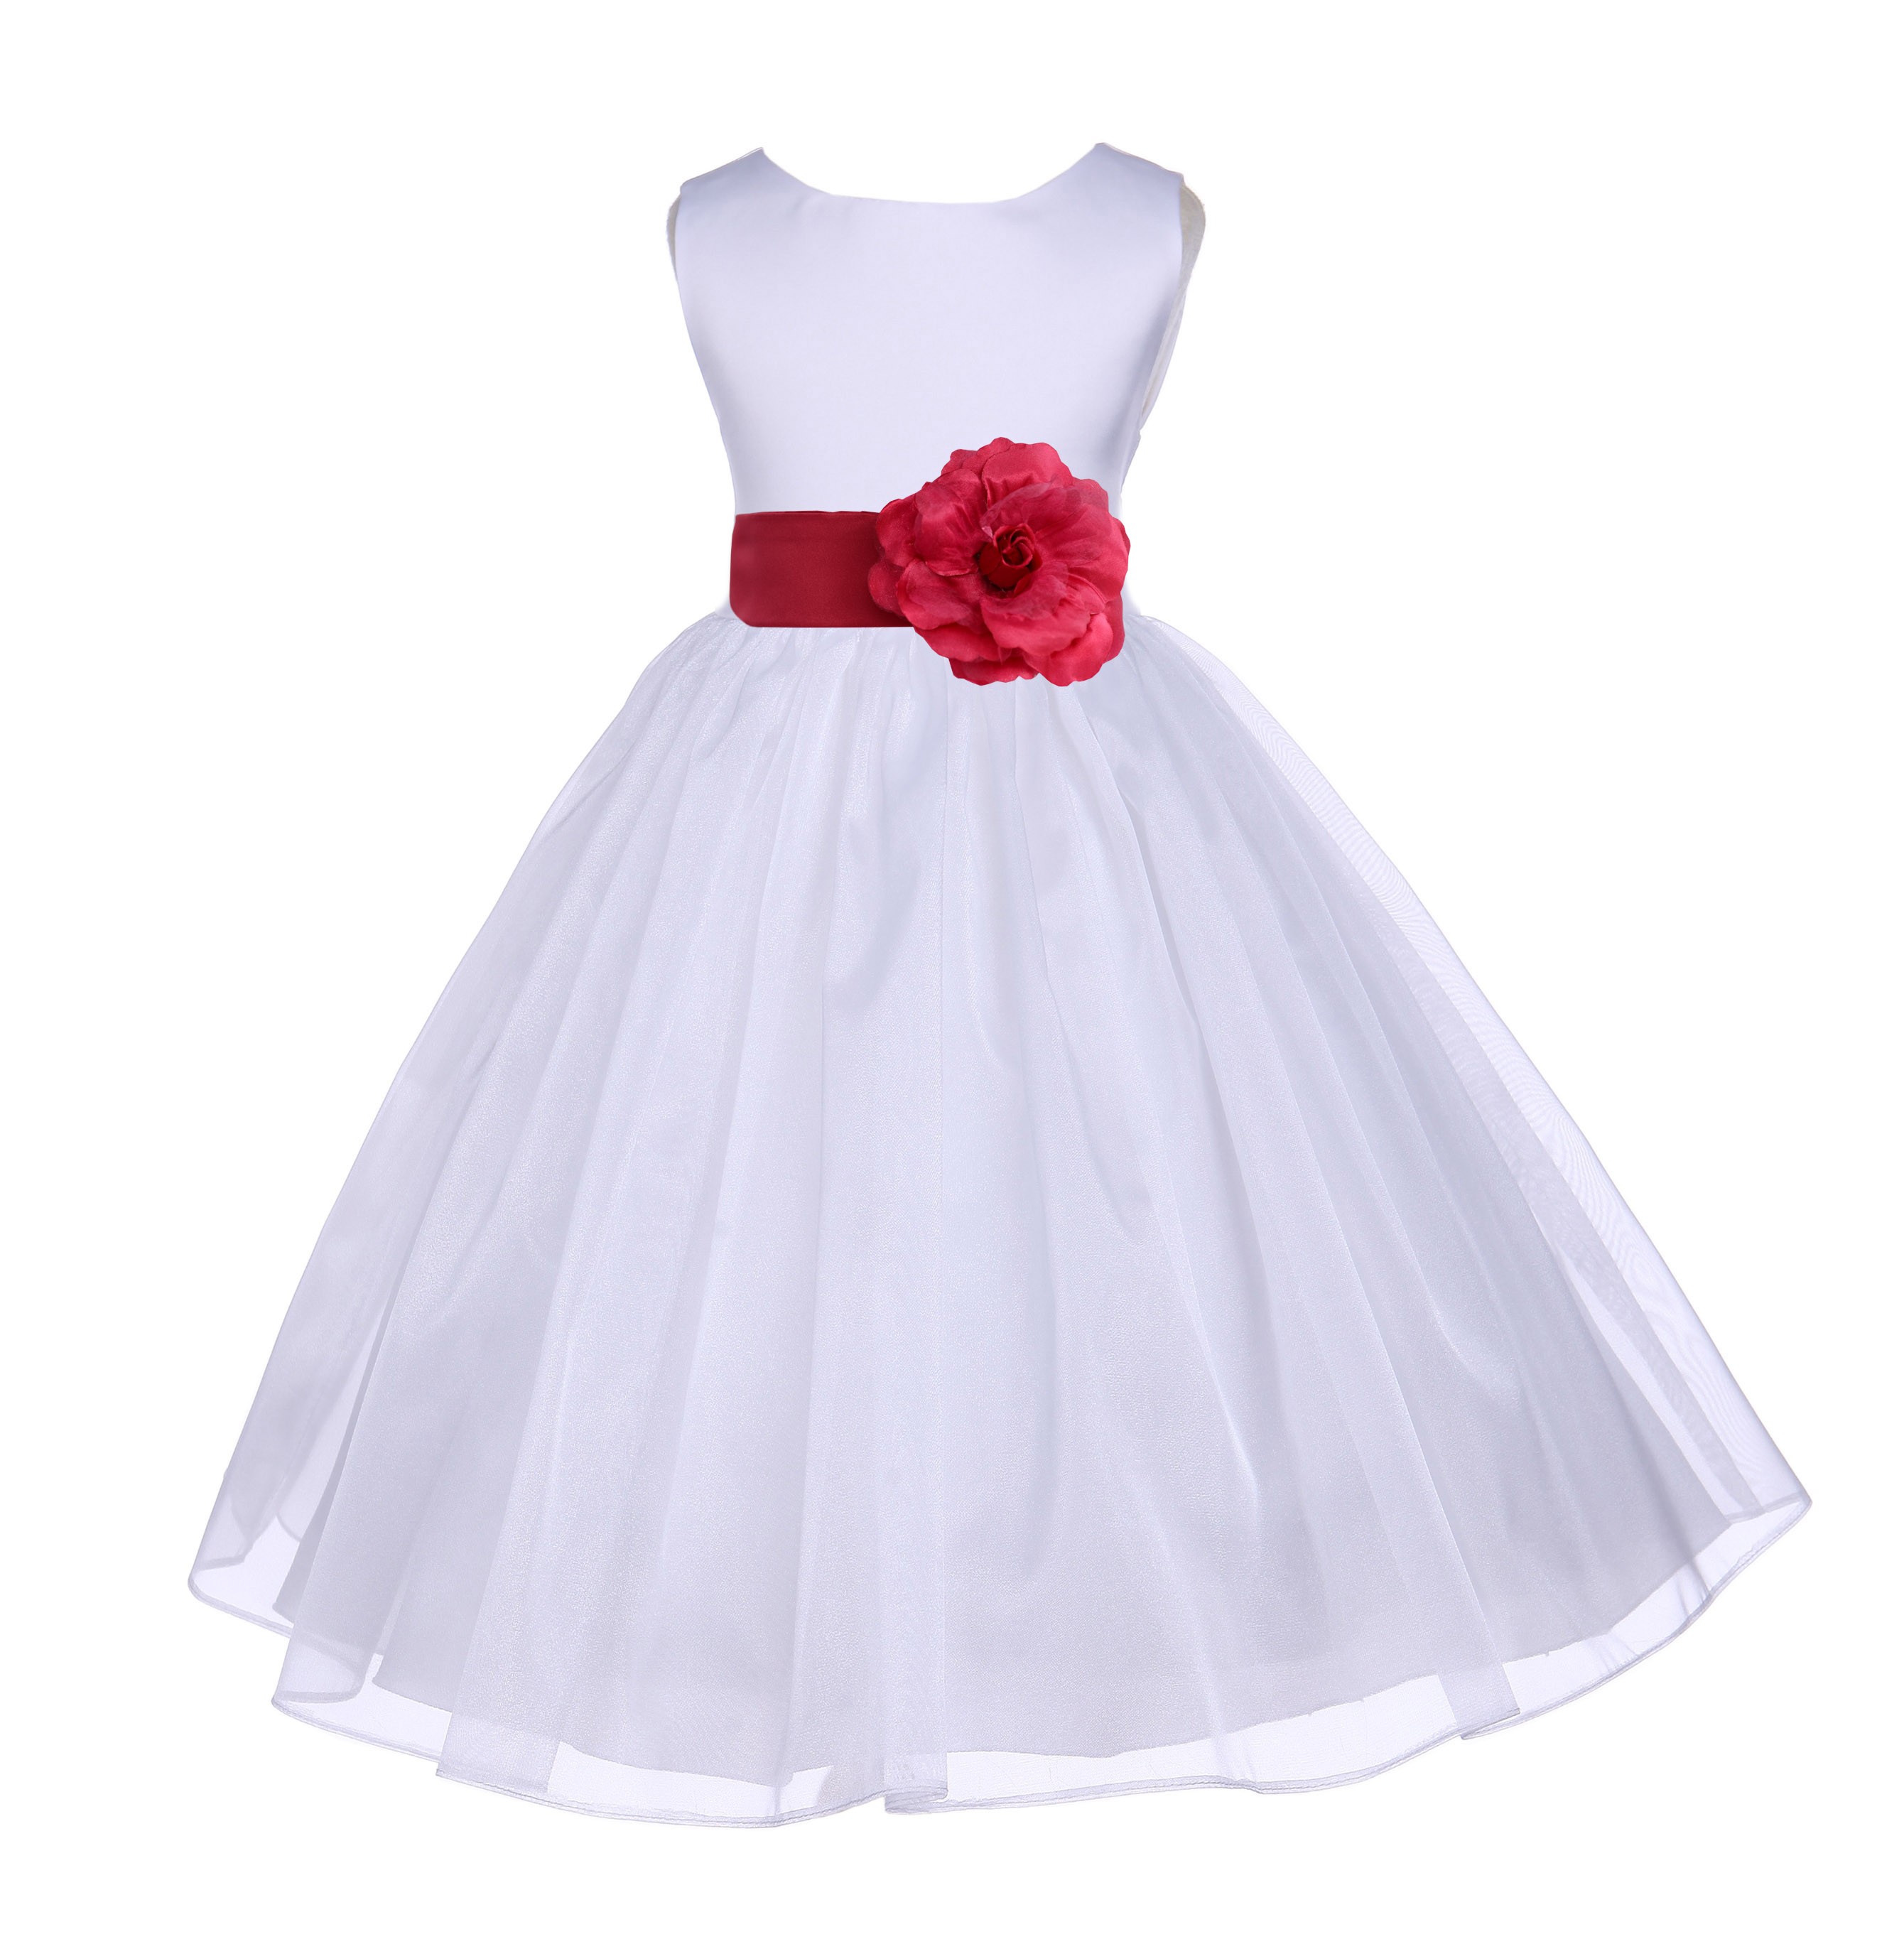 White/Watermelon Satin Bodice Organza Skirt Flower Girl Dress 841S